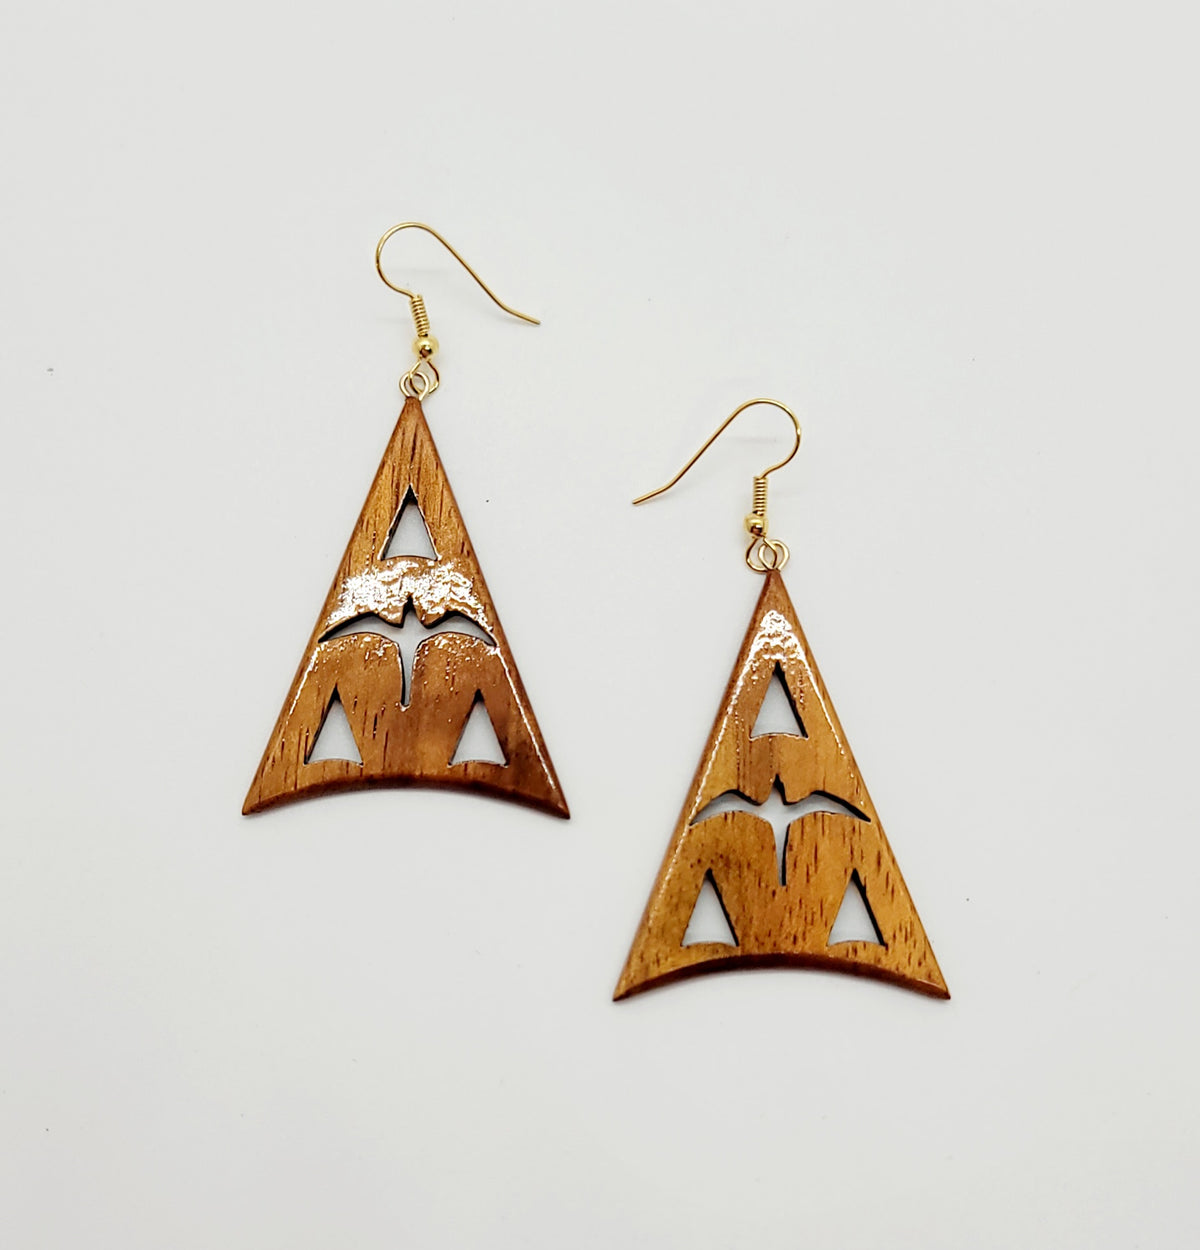 Pop-Up Mākeke - Hawaiian Accessories - Sail Cut-Out Koa Wood Earrings - ʻIwa